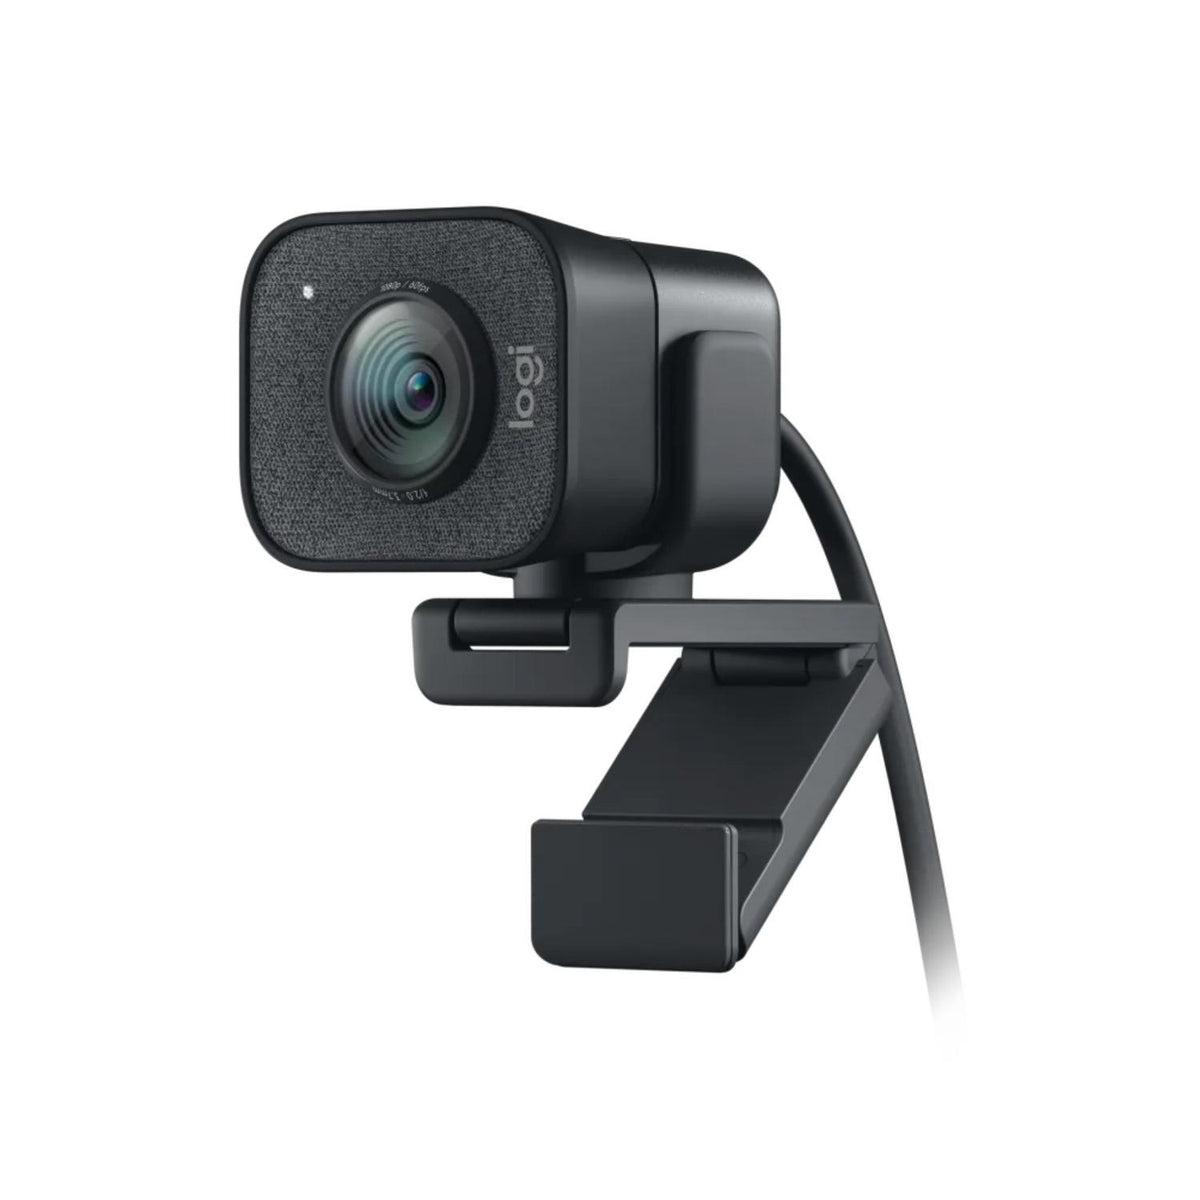 Logitech Webcam Webcam StreamCam Plus - vertikal